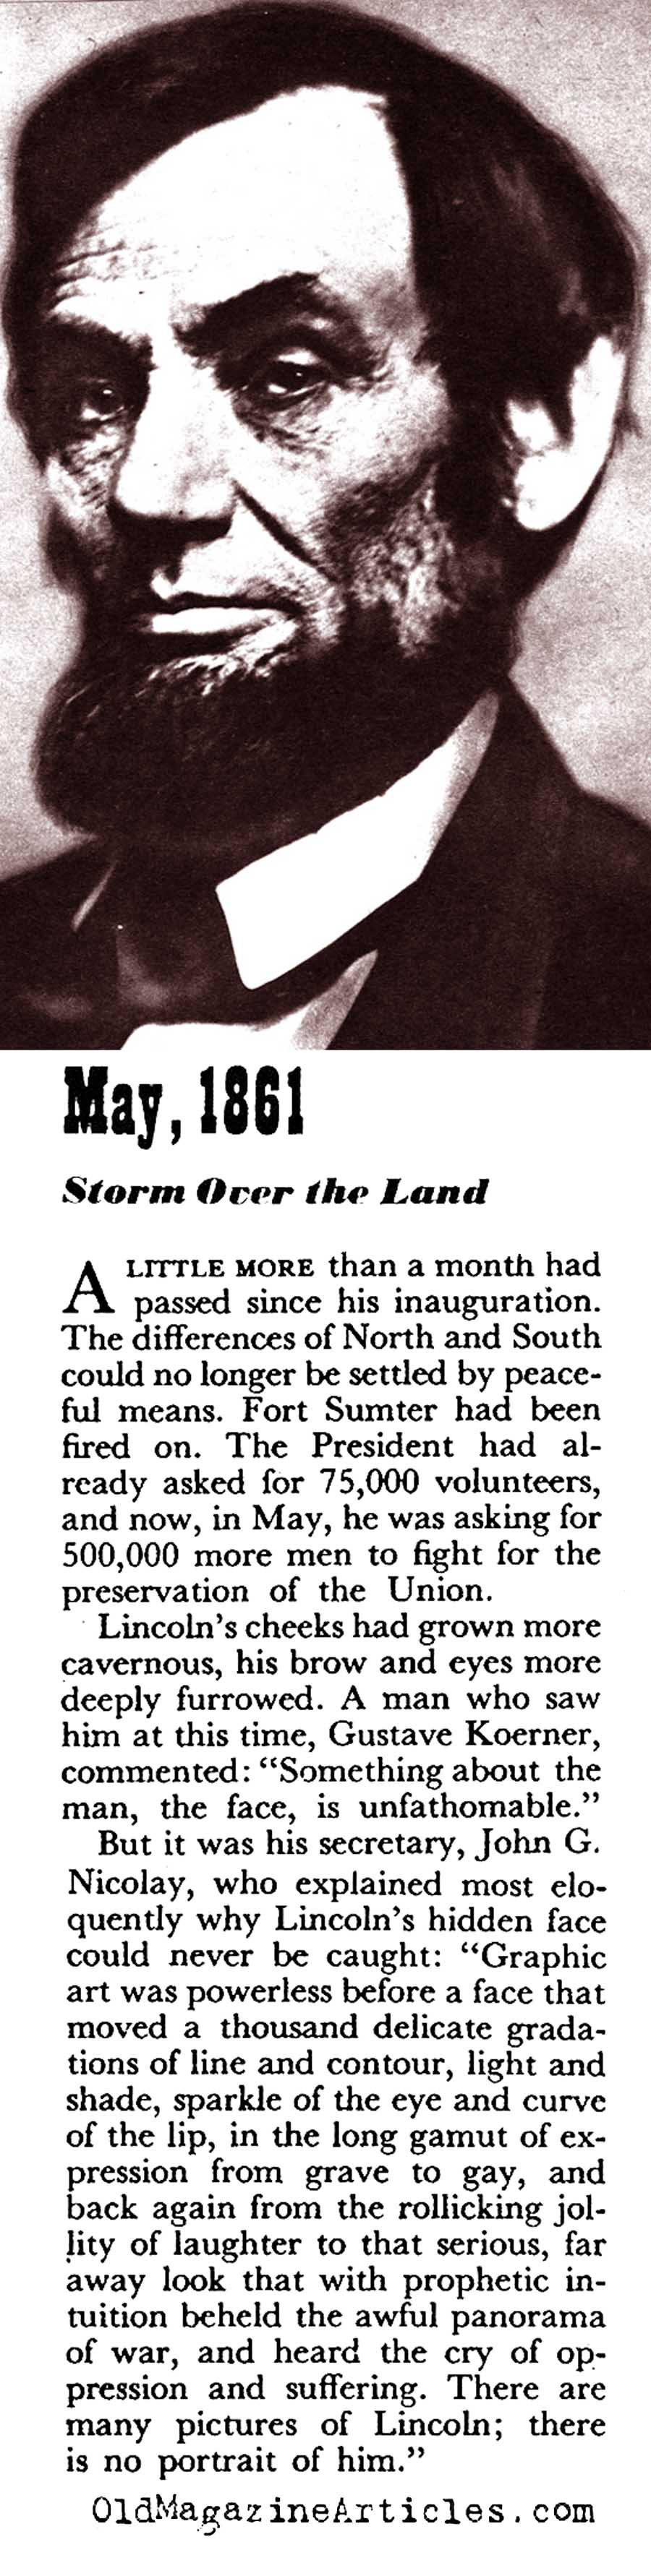 The Age Progression of President Lincoln (Coronet Magazine, 1945)